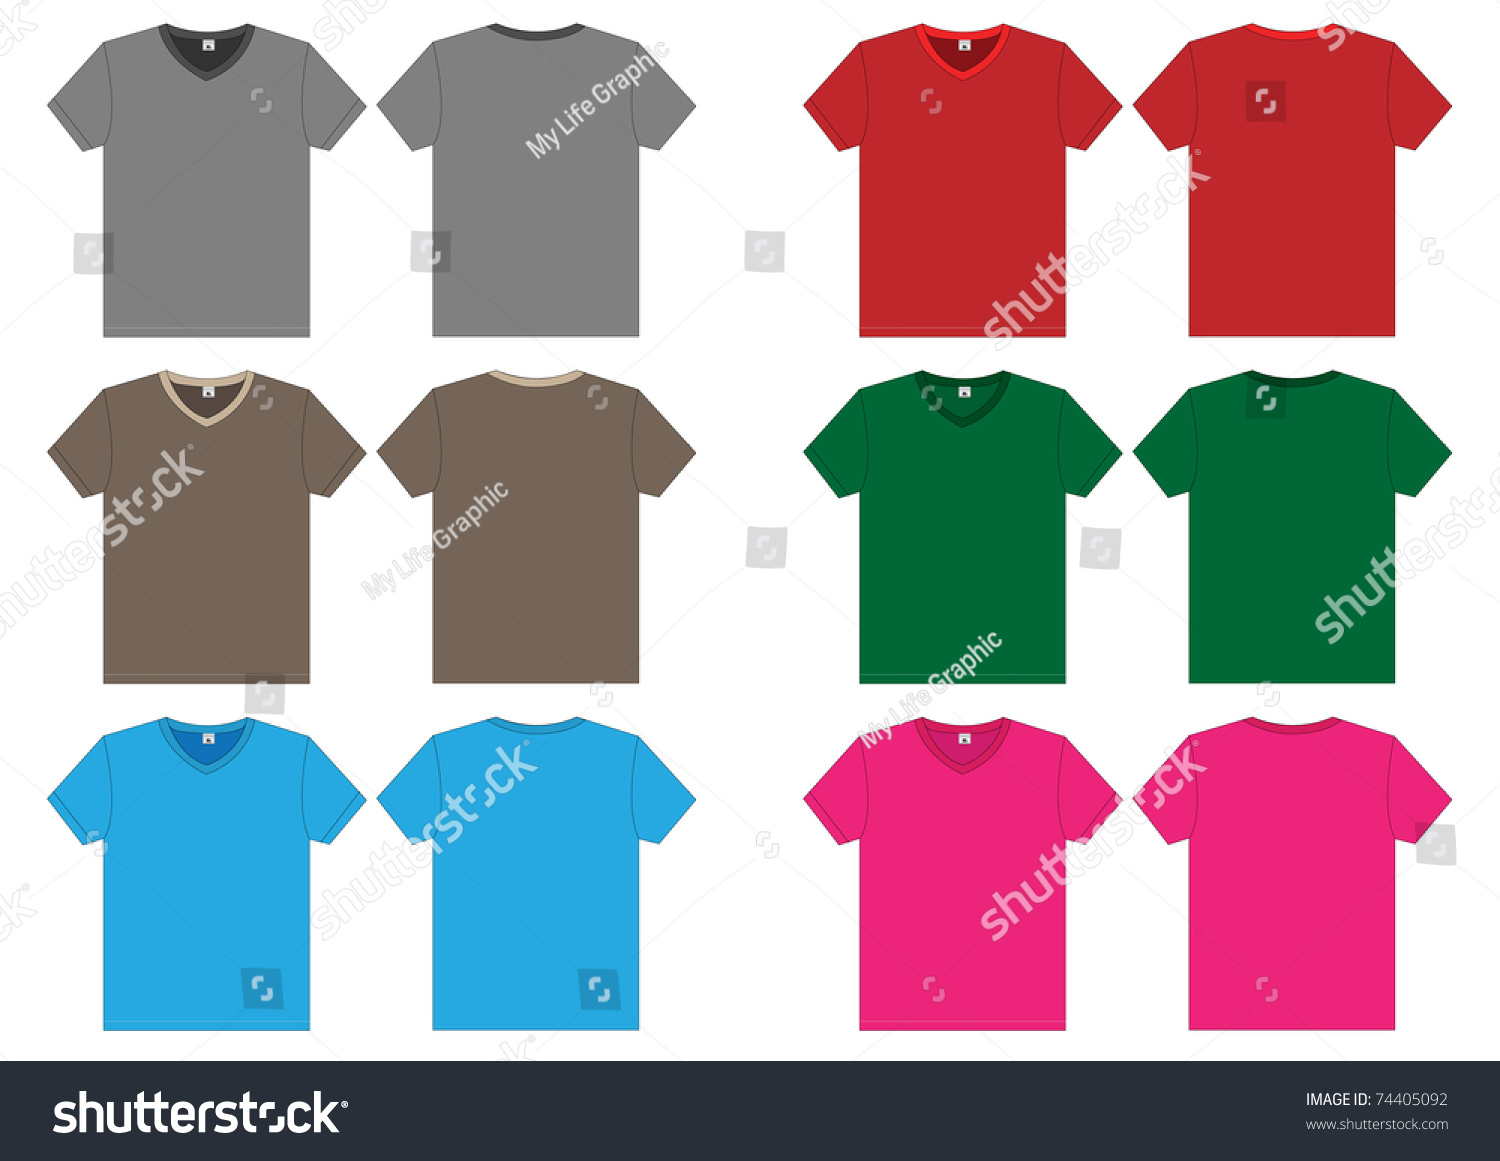 V-Neck T-Shirt. Vector Template - 74405092 : Shutterstock